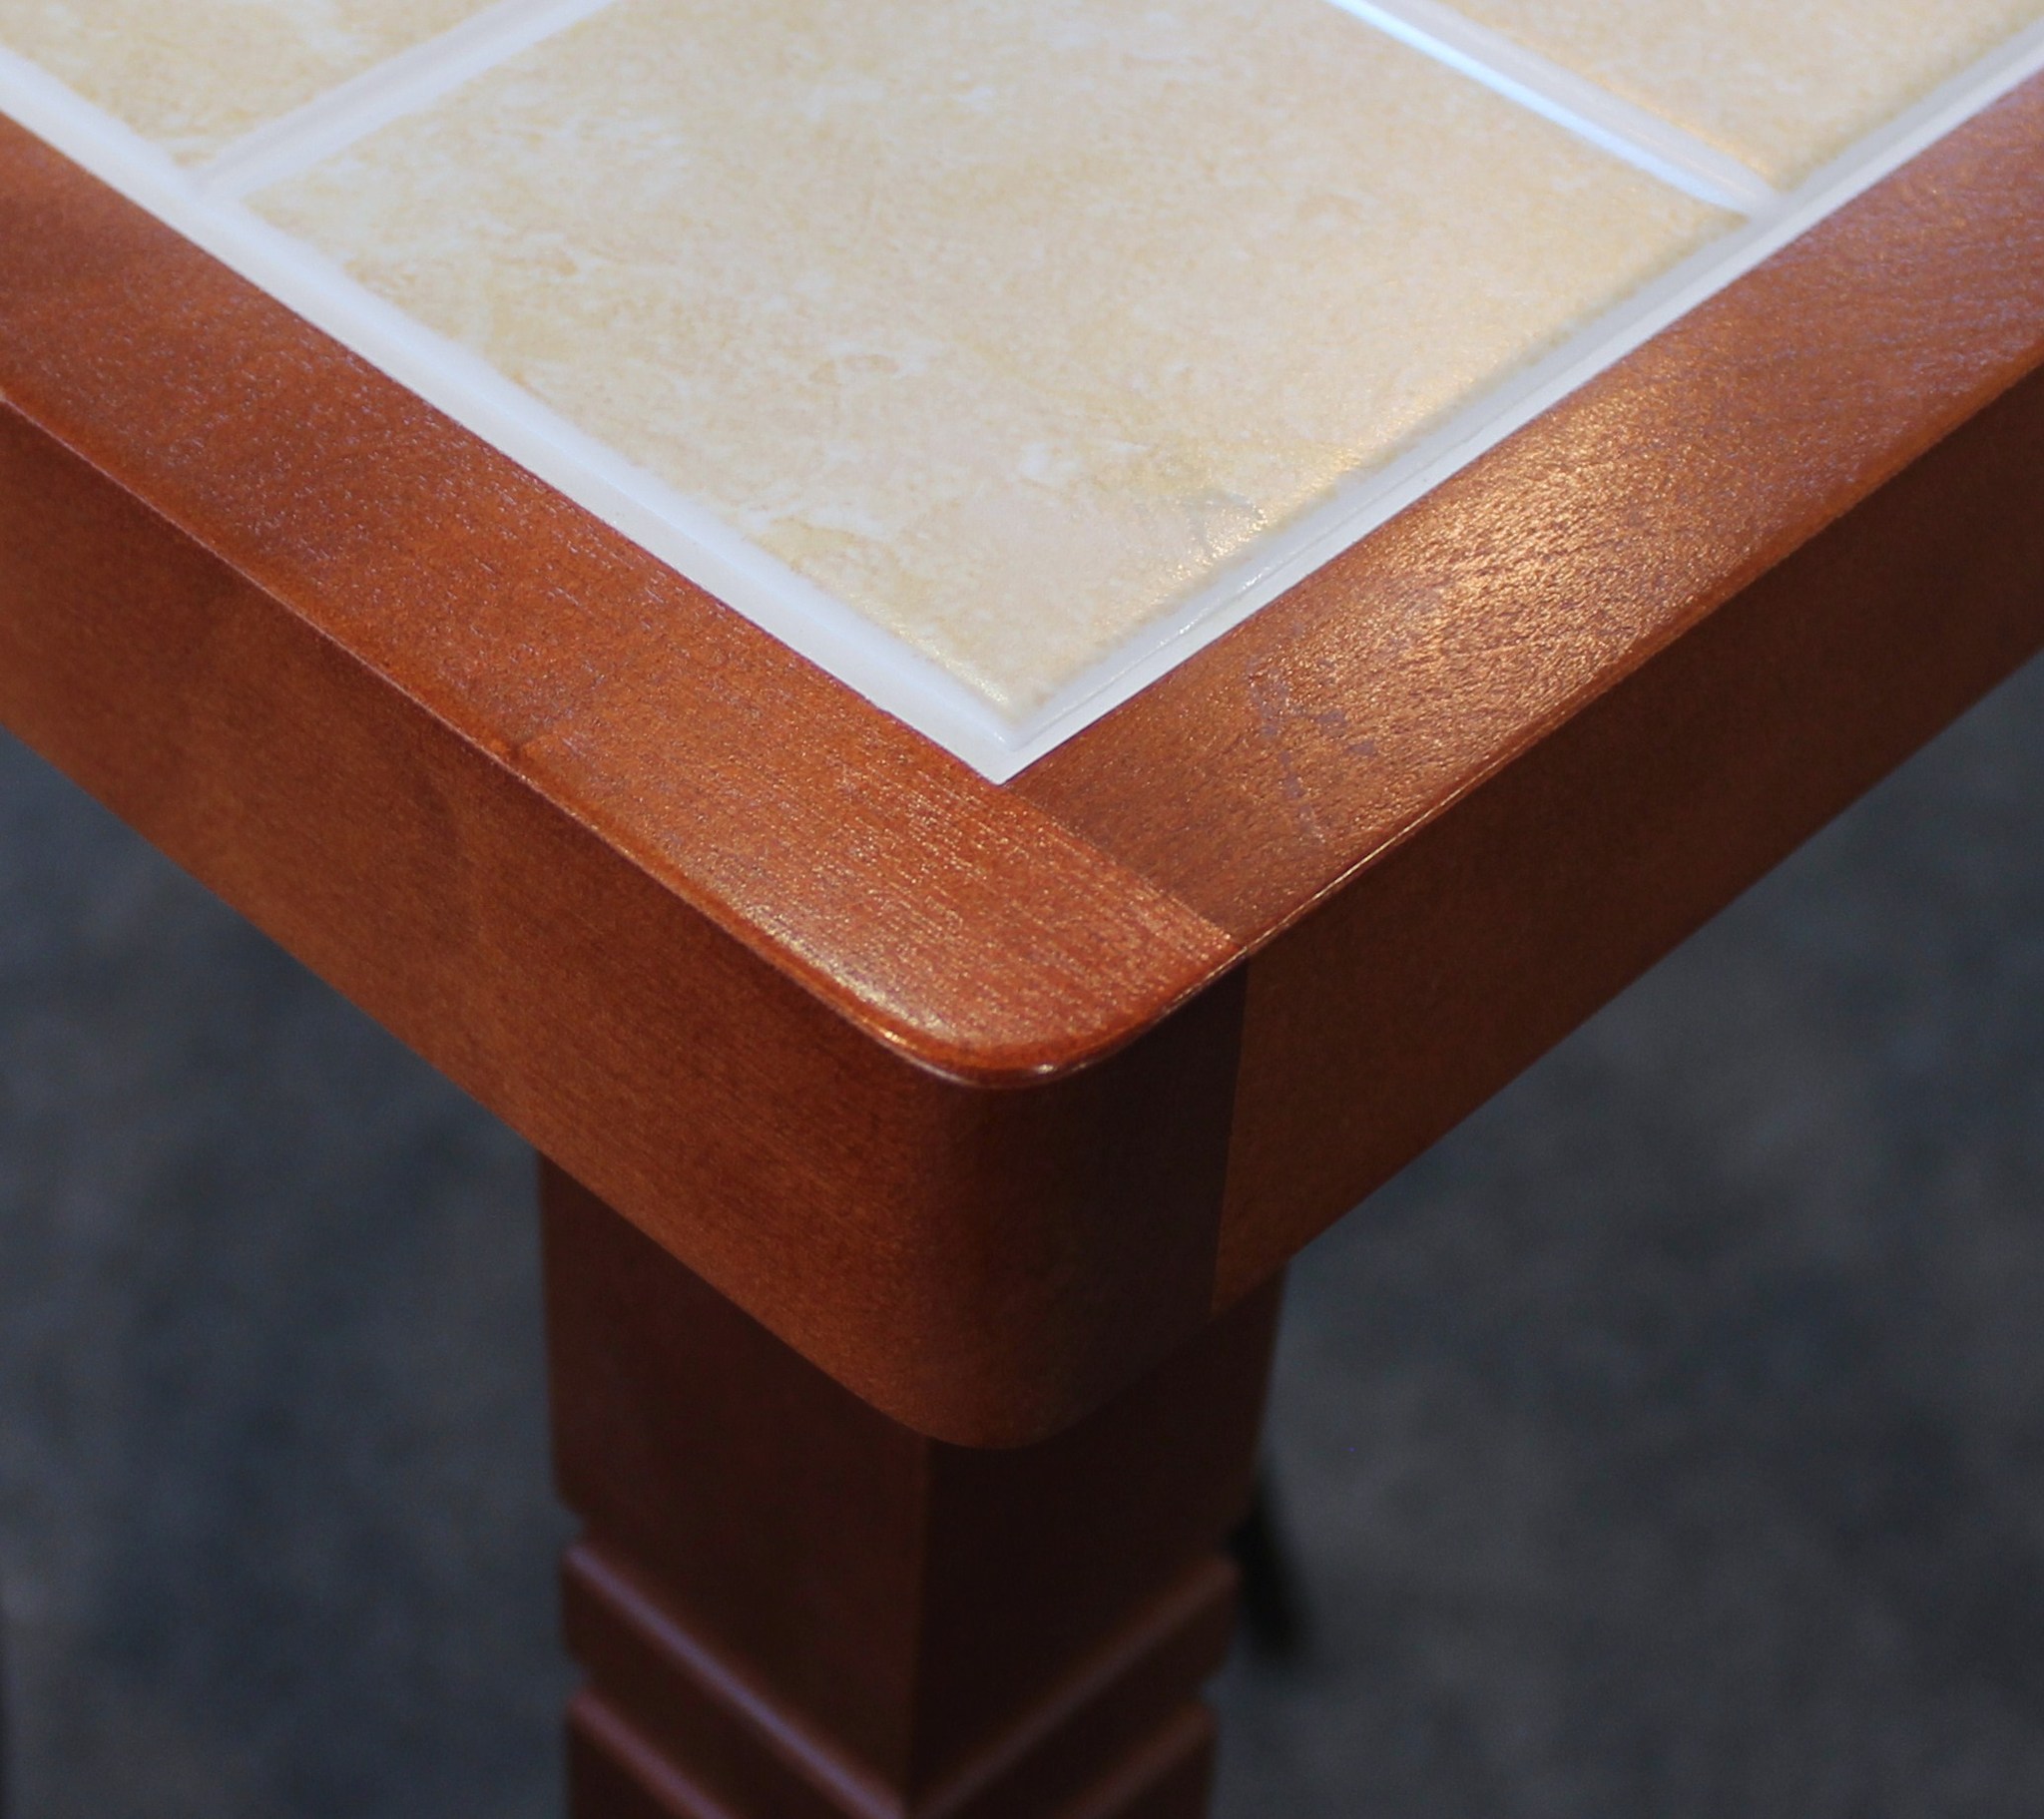 стол со столешницей из керамики